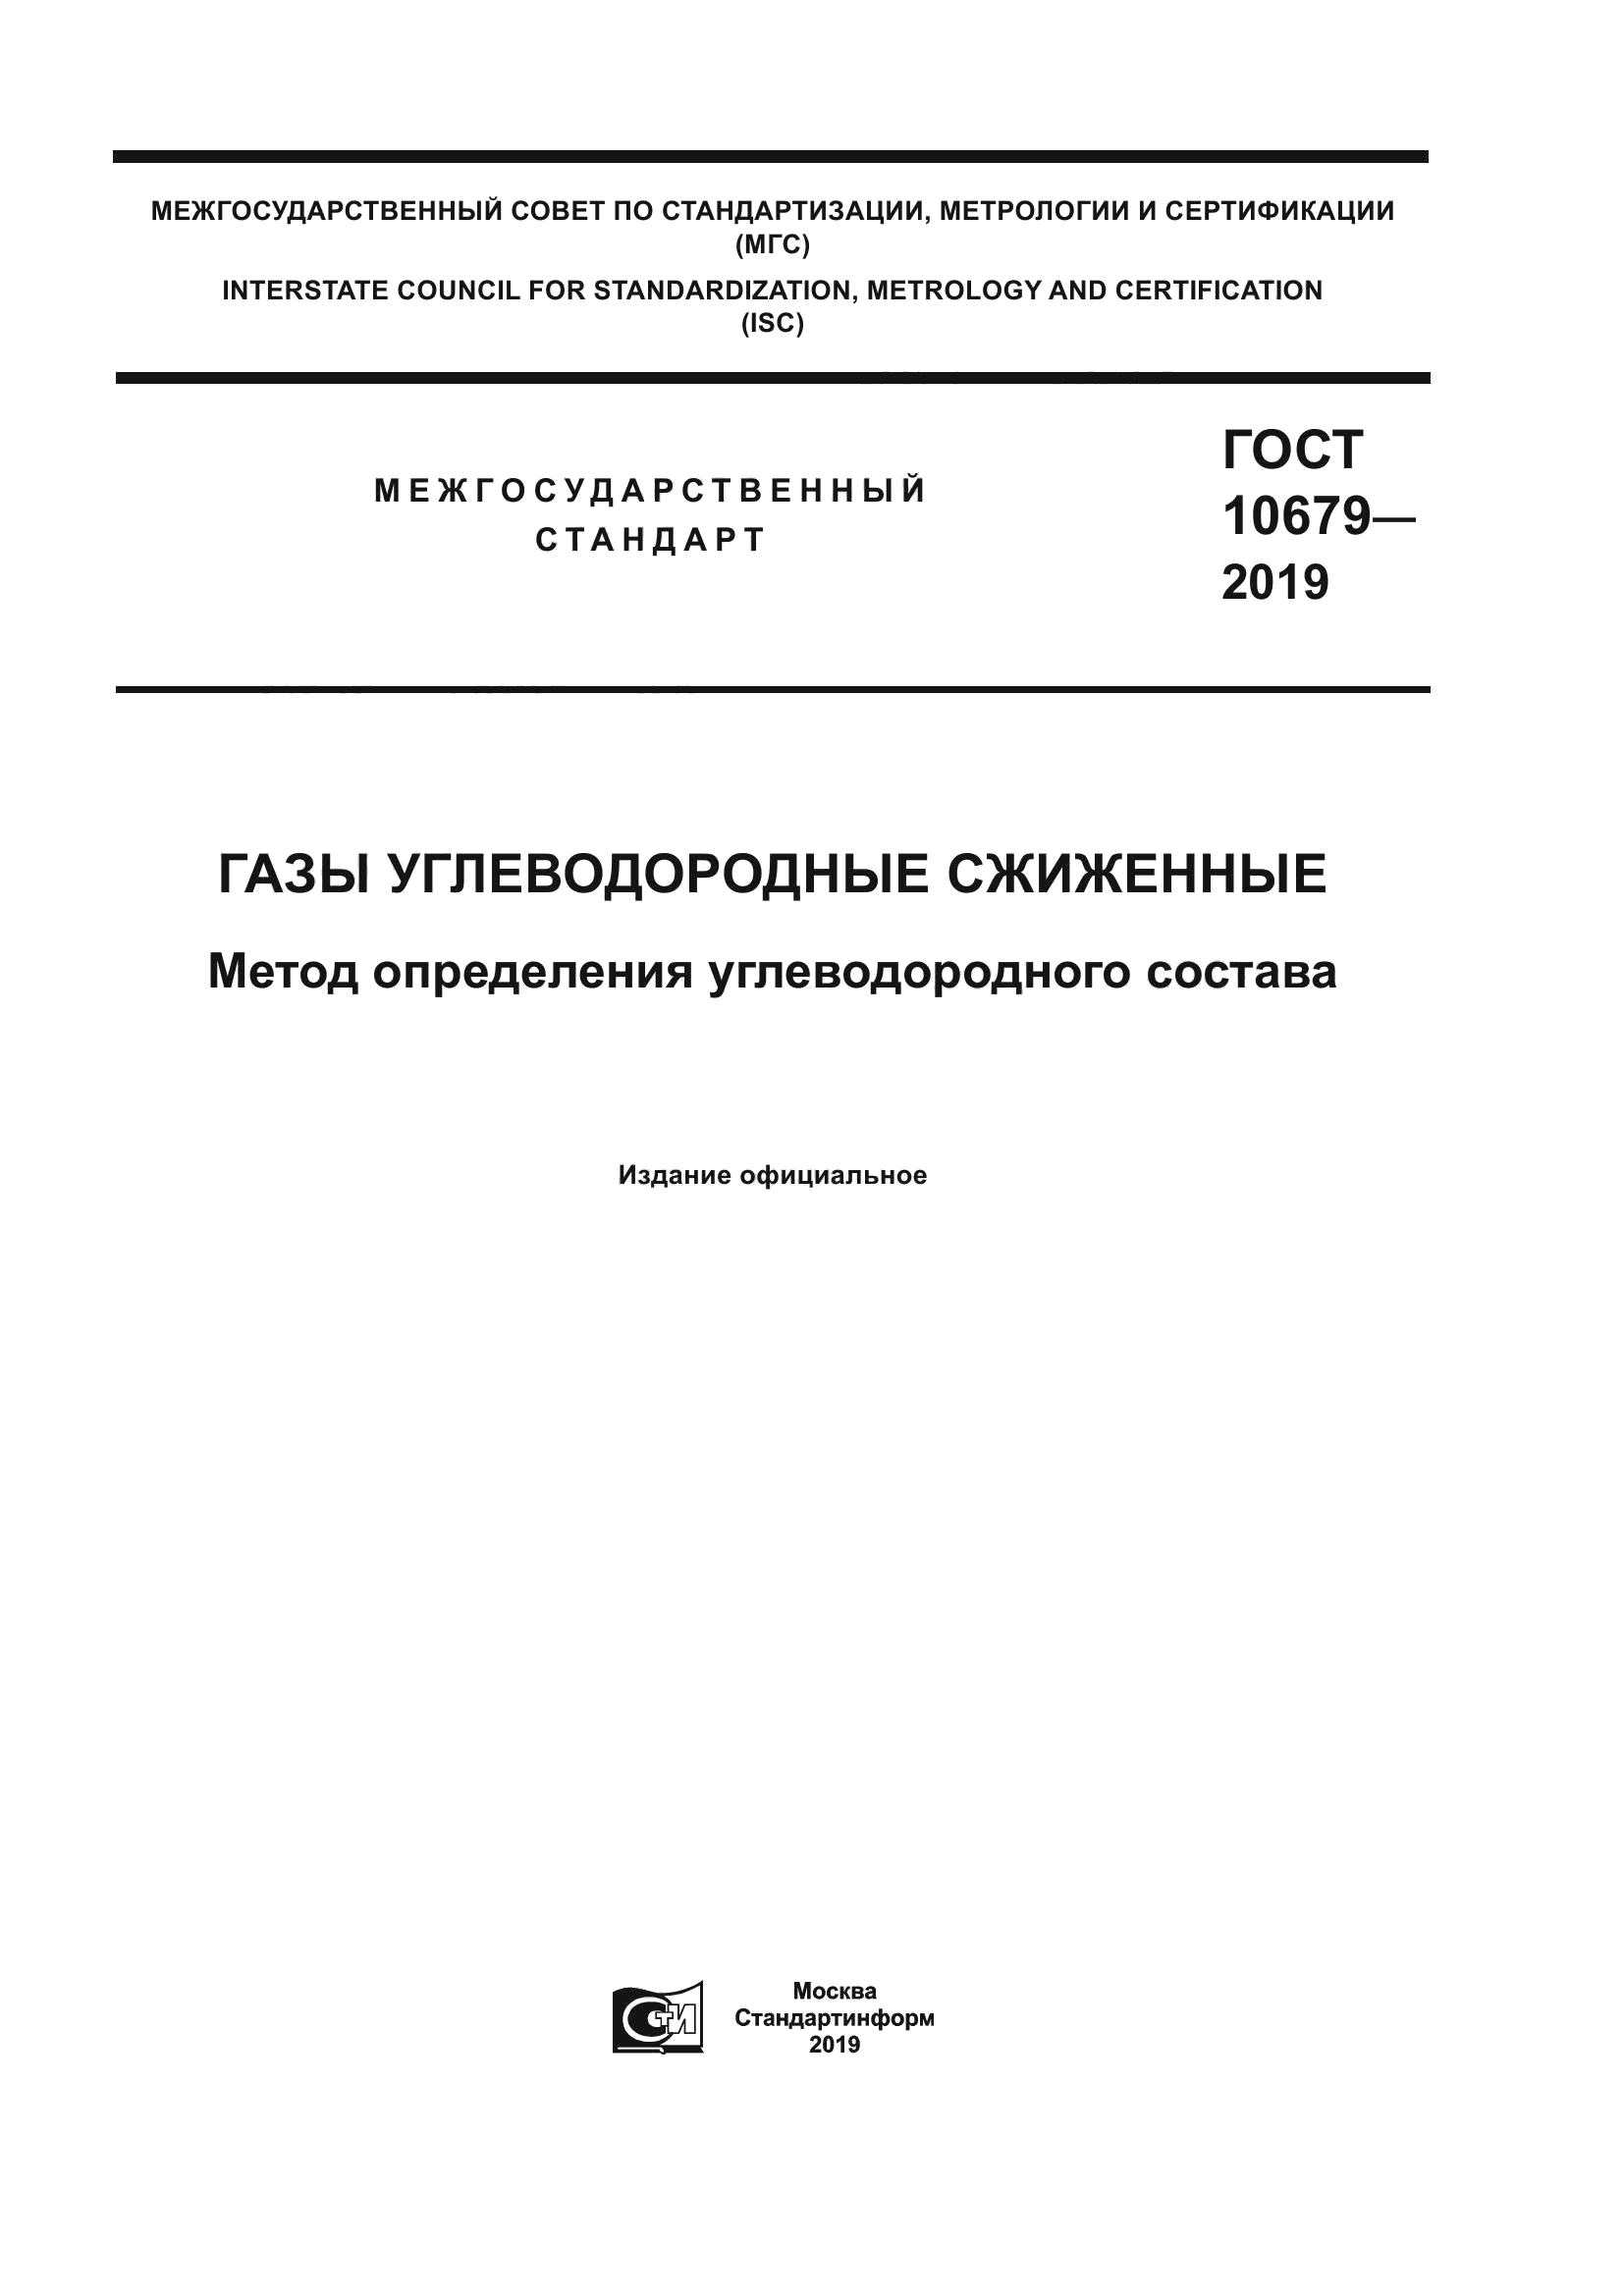 ГОСТ 10679-2019